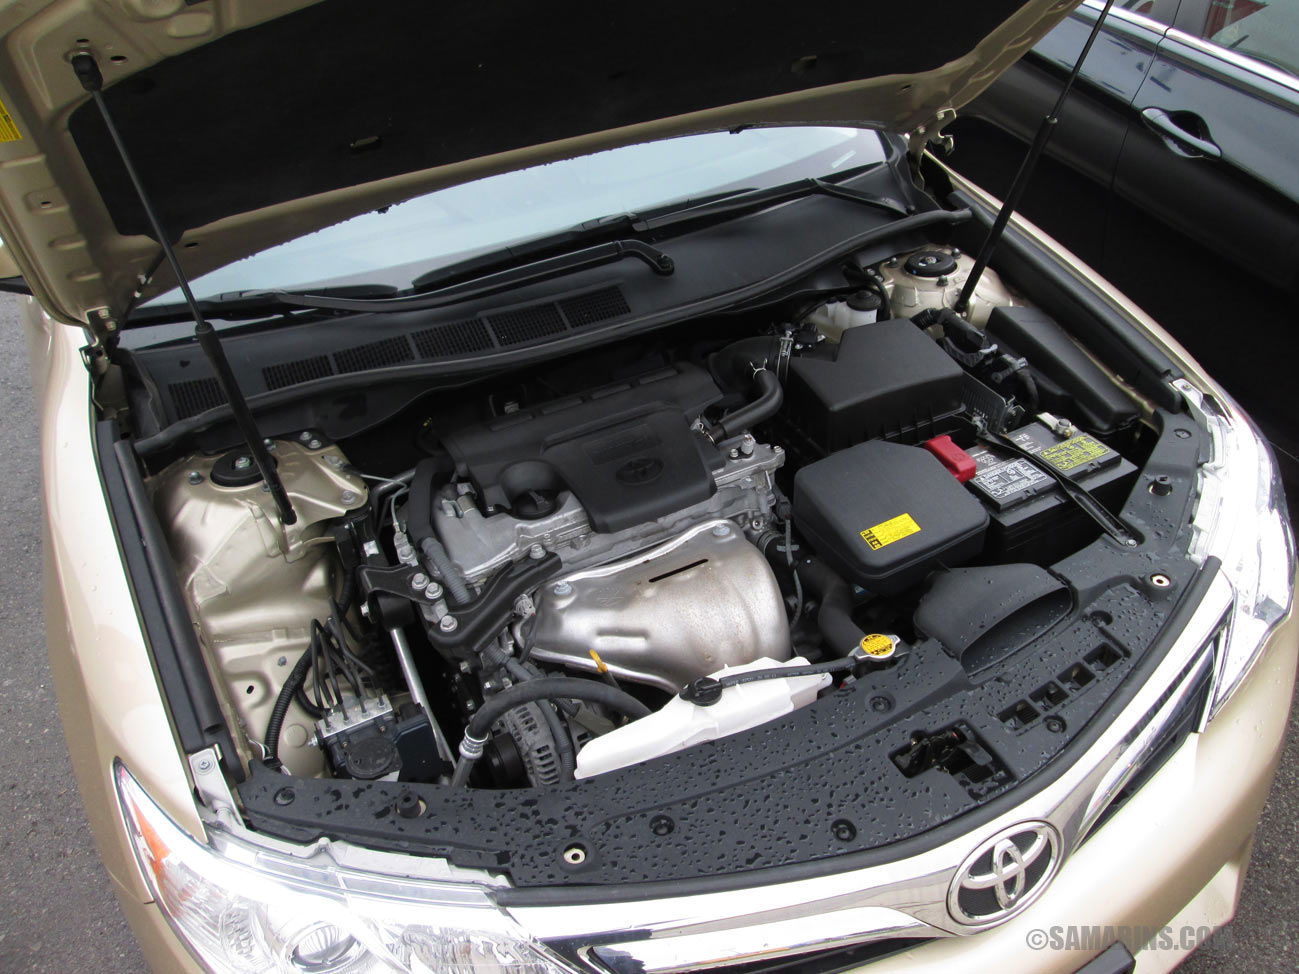 2012 Toyota Camry 4-cylinder engine.